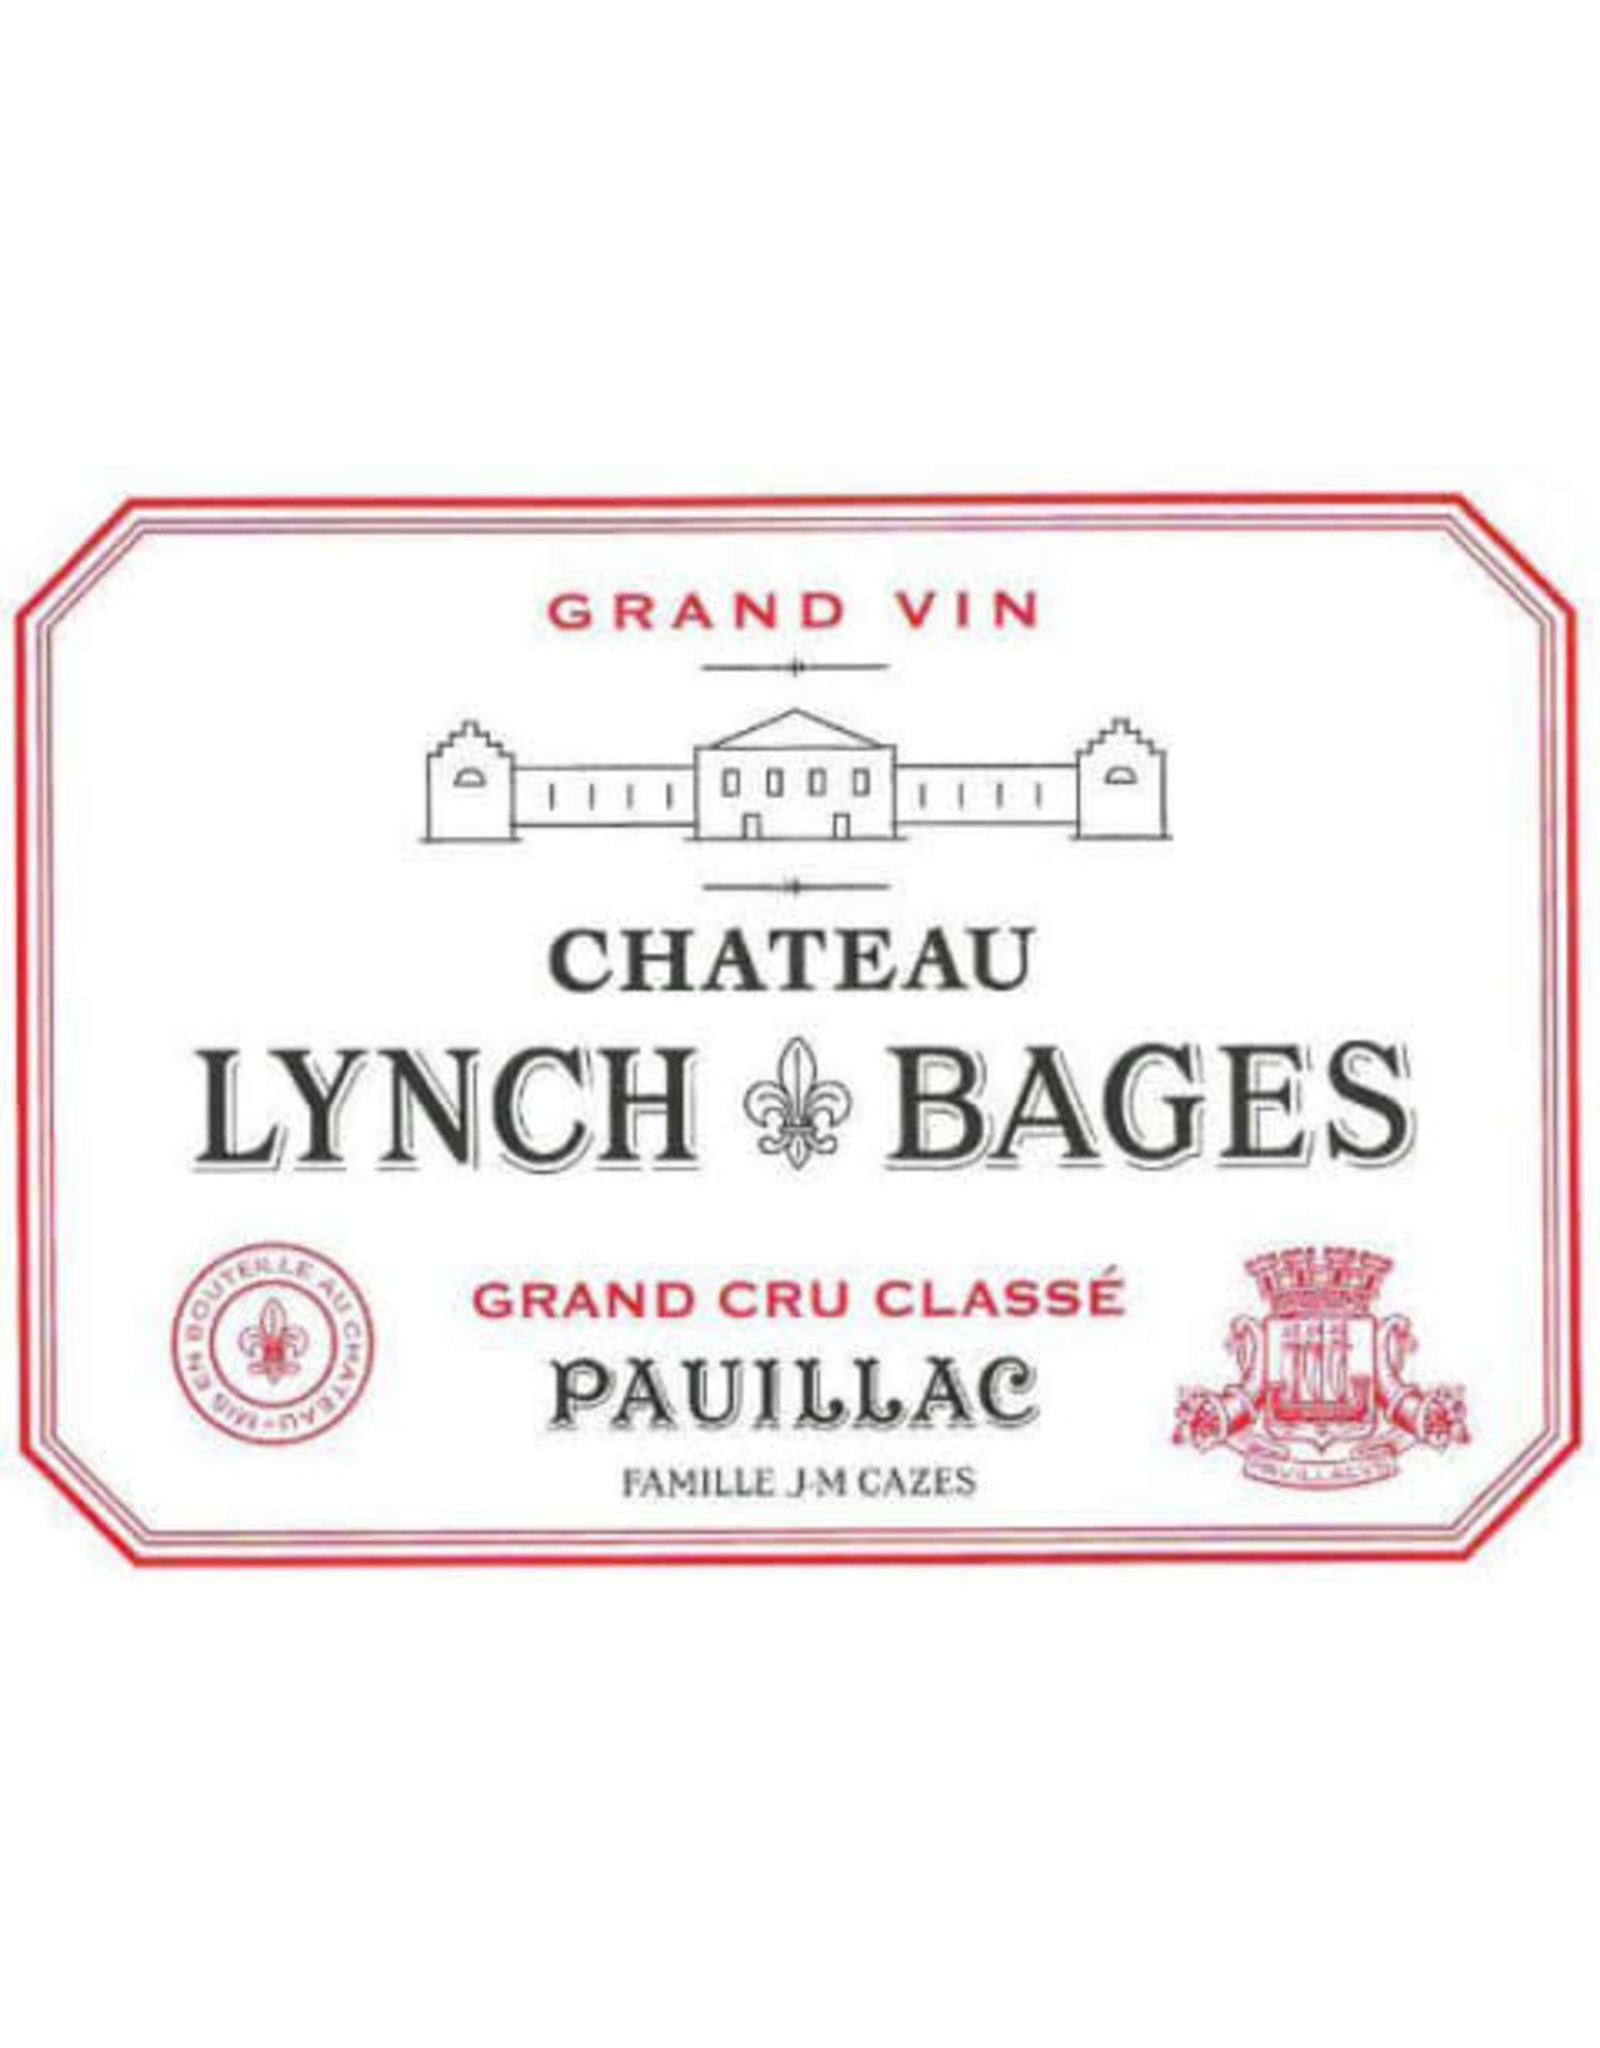 France Chateau Lynch Bages Grand Cru Classé Pauillac